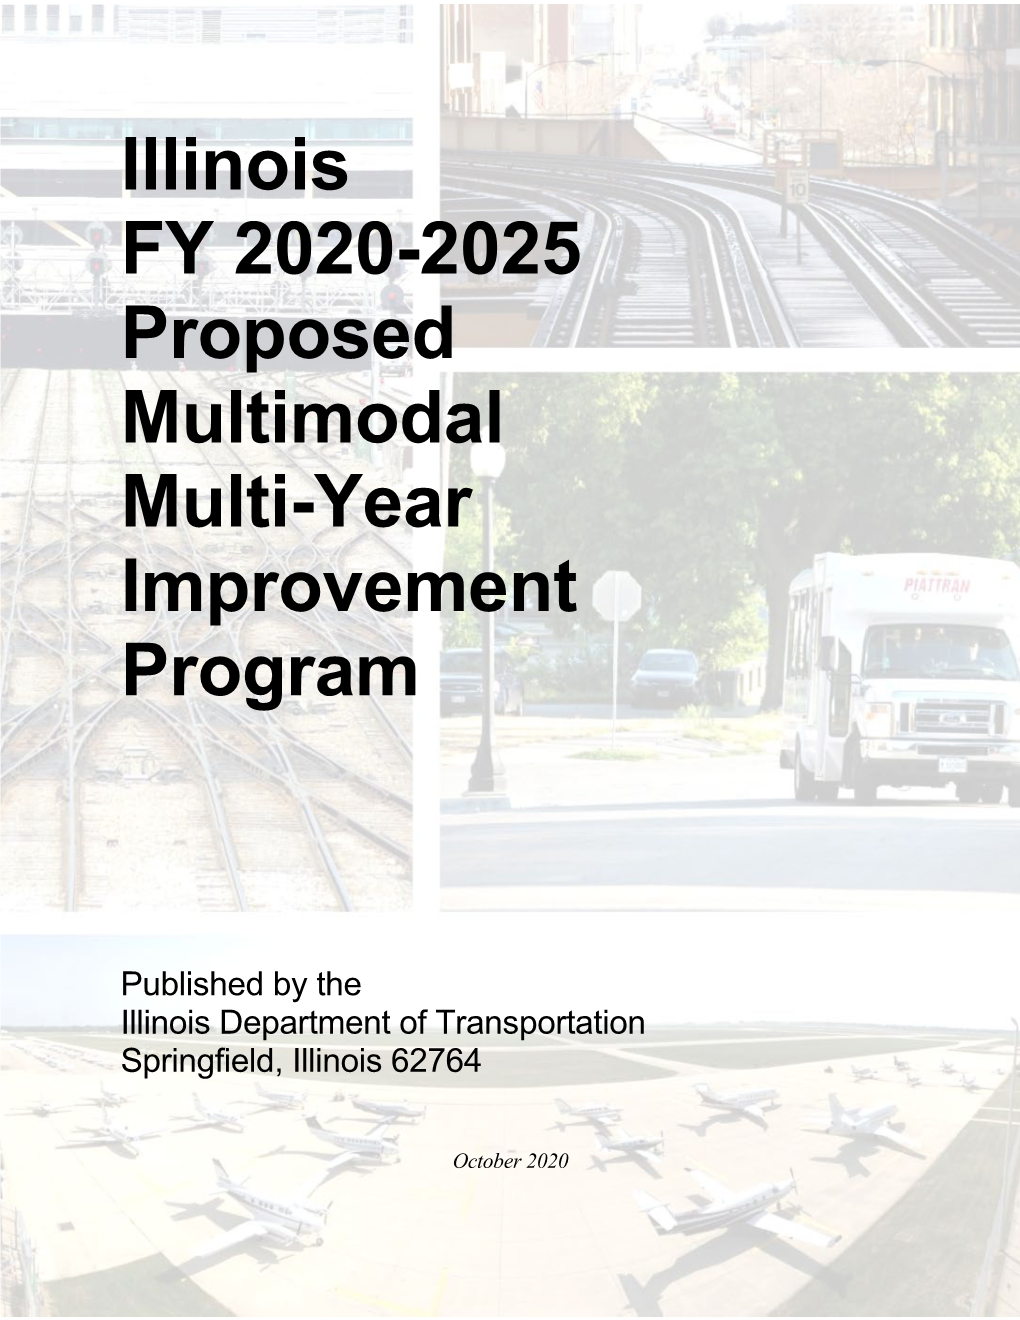 Illinois FY 2020-2025 Proposed Multimodal Multi-Year Improvement Program